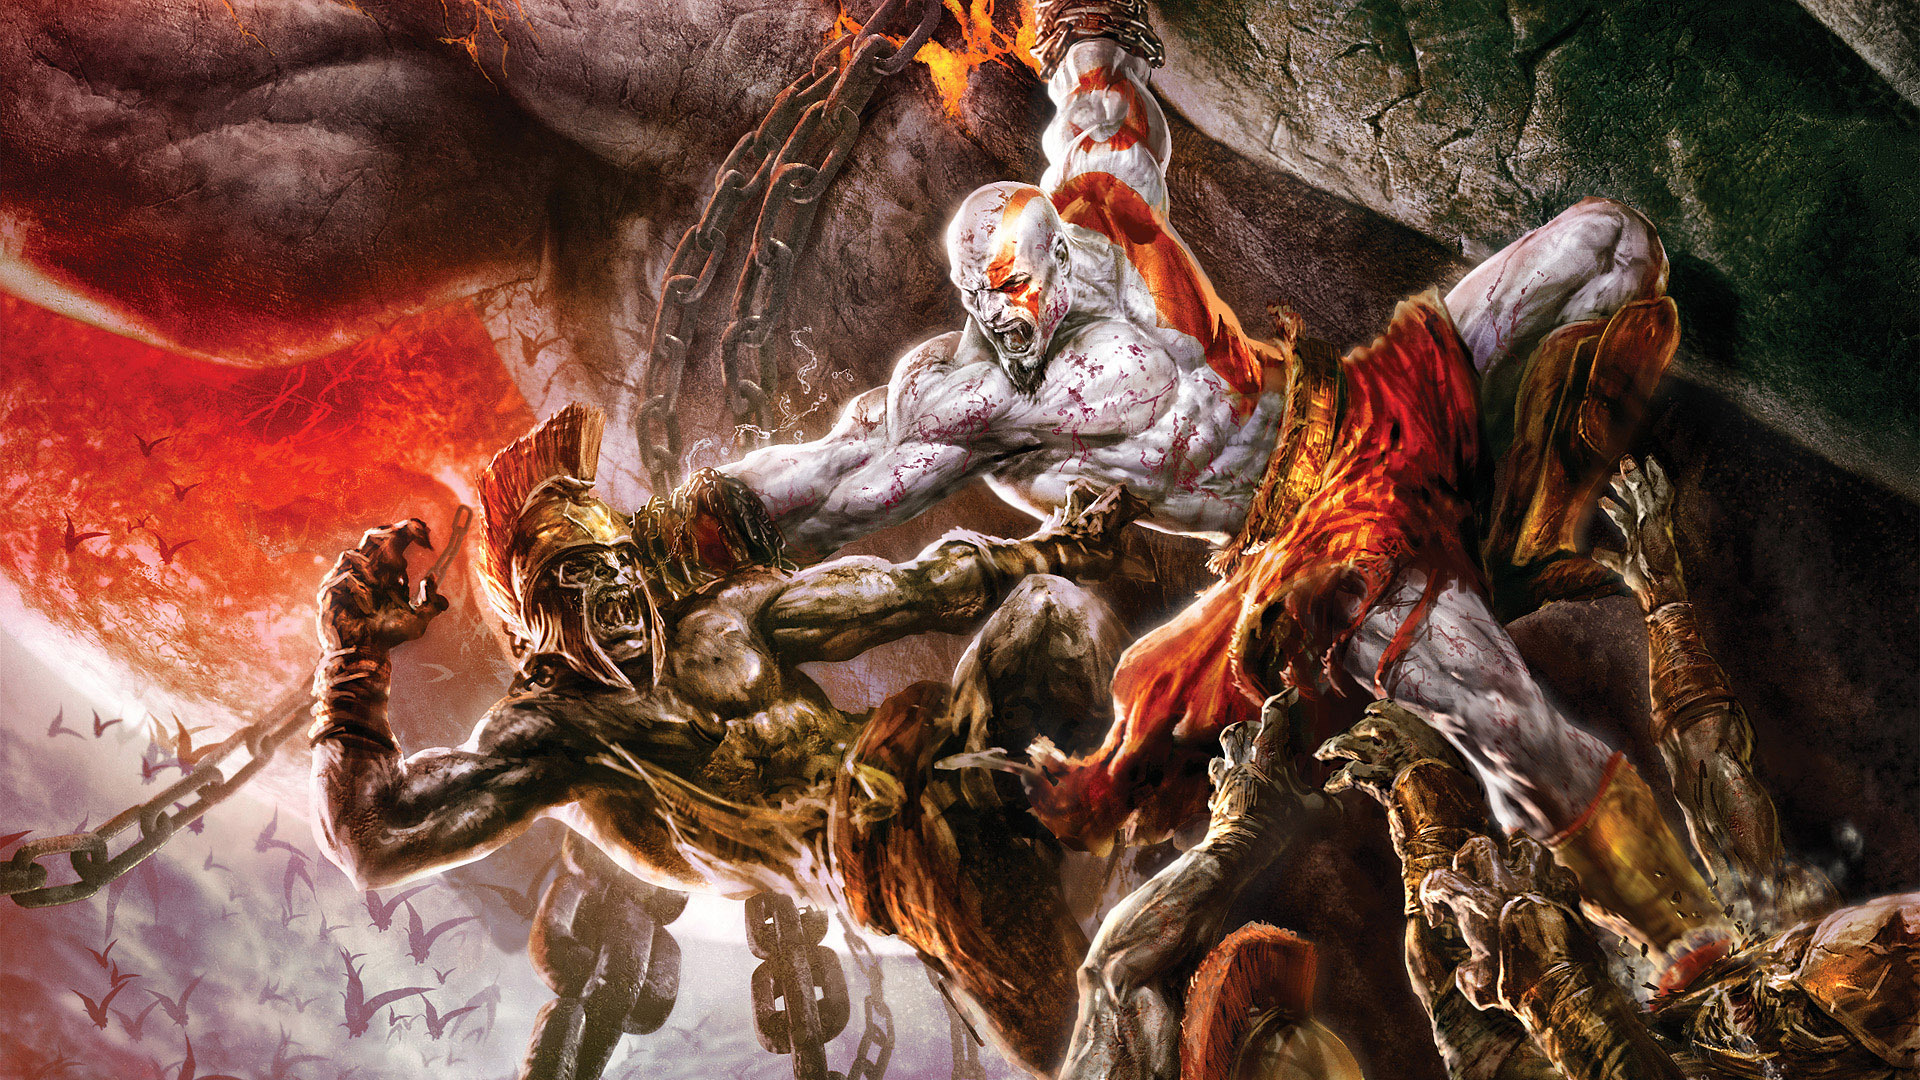 Wallpapers kratos god of war battle on the desktop